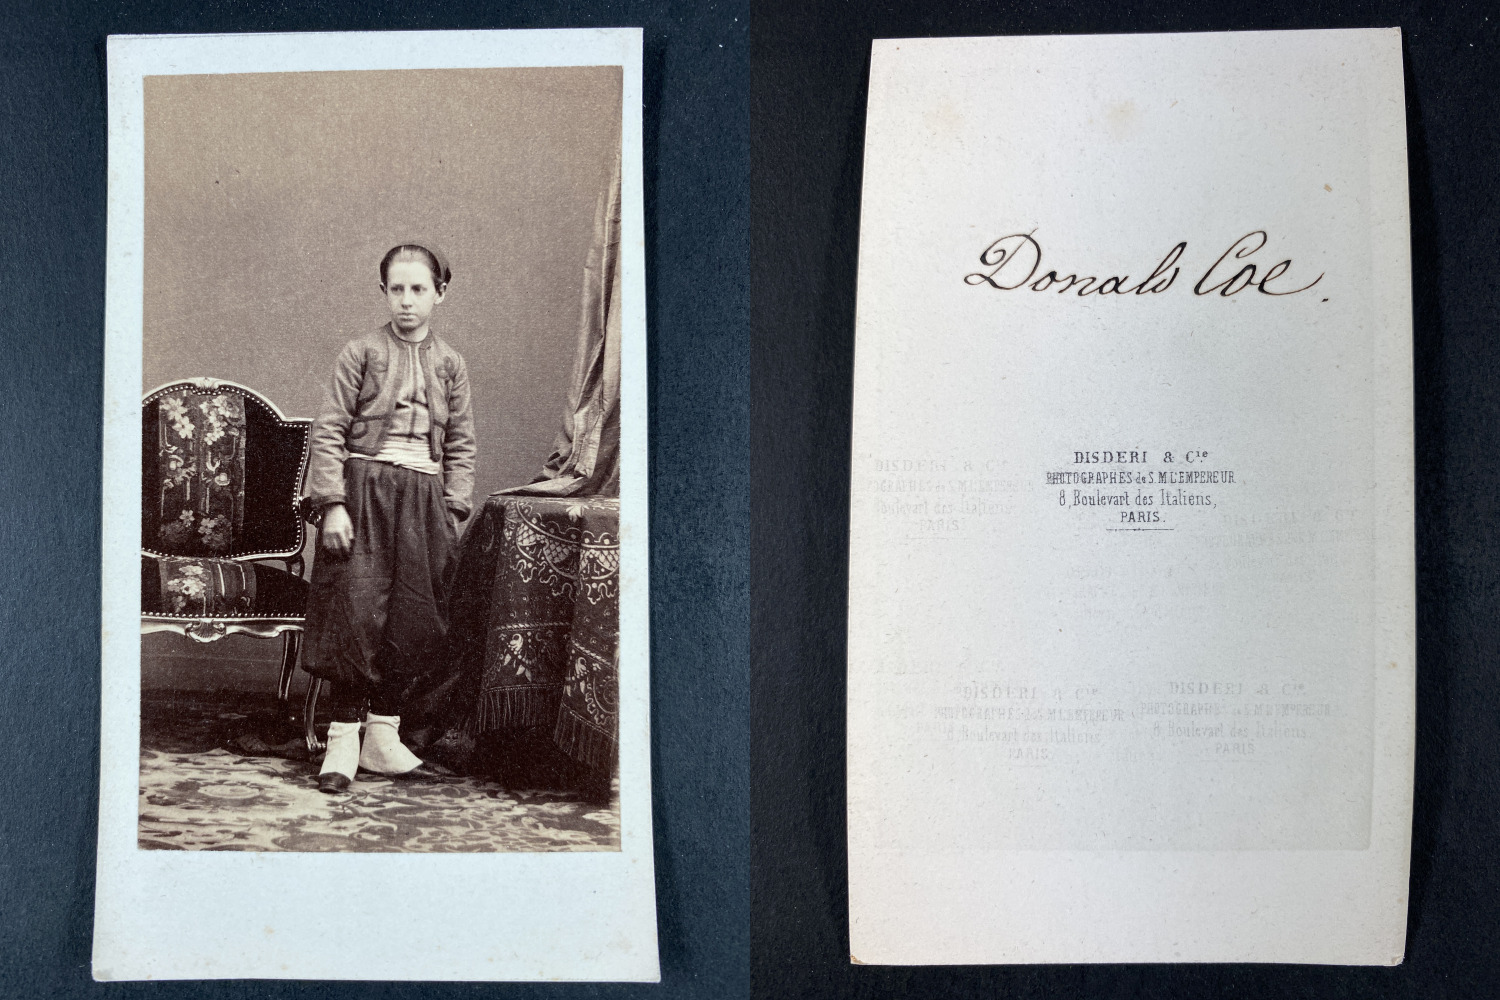 Disderi, Paris, Donald Coe in Zouave Outfit Vintage cdv albumen print CDV, t